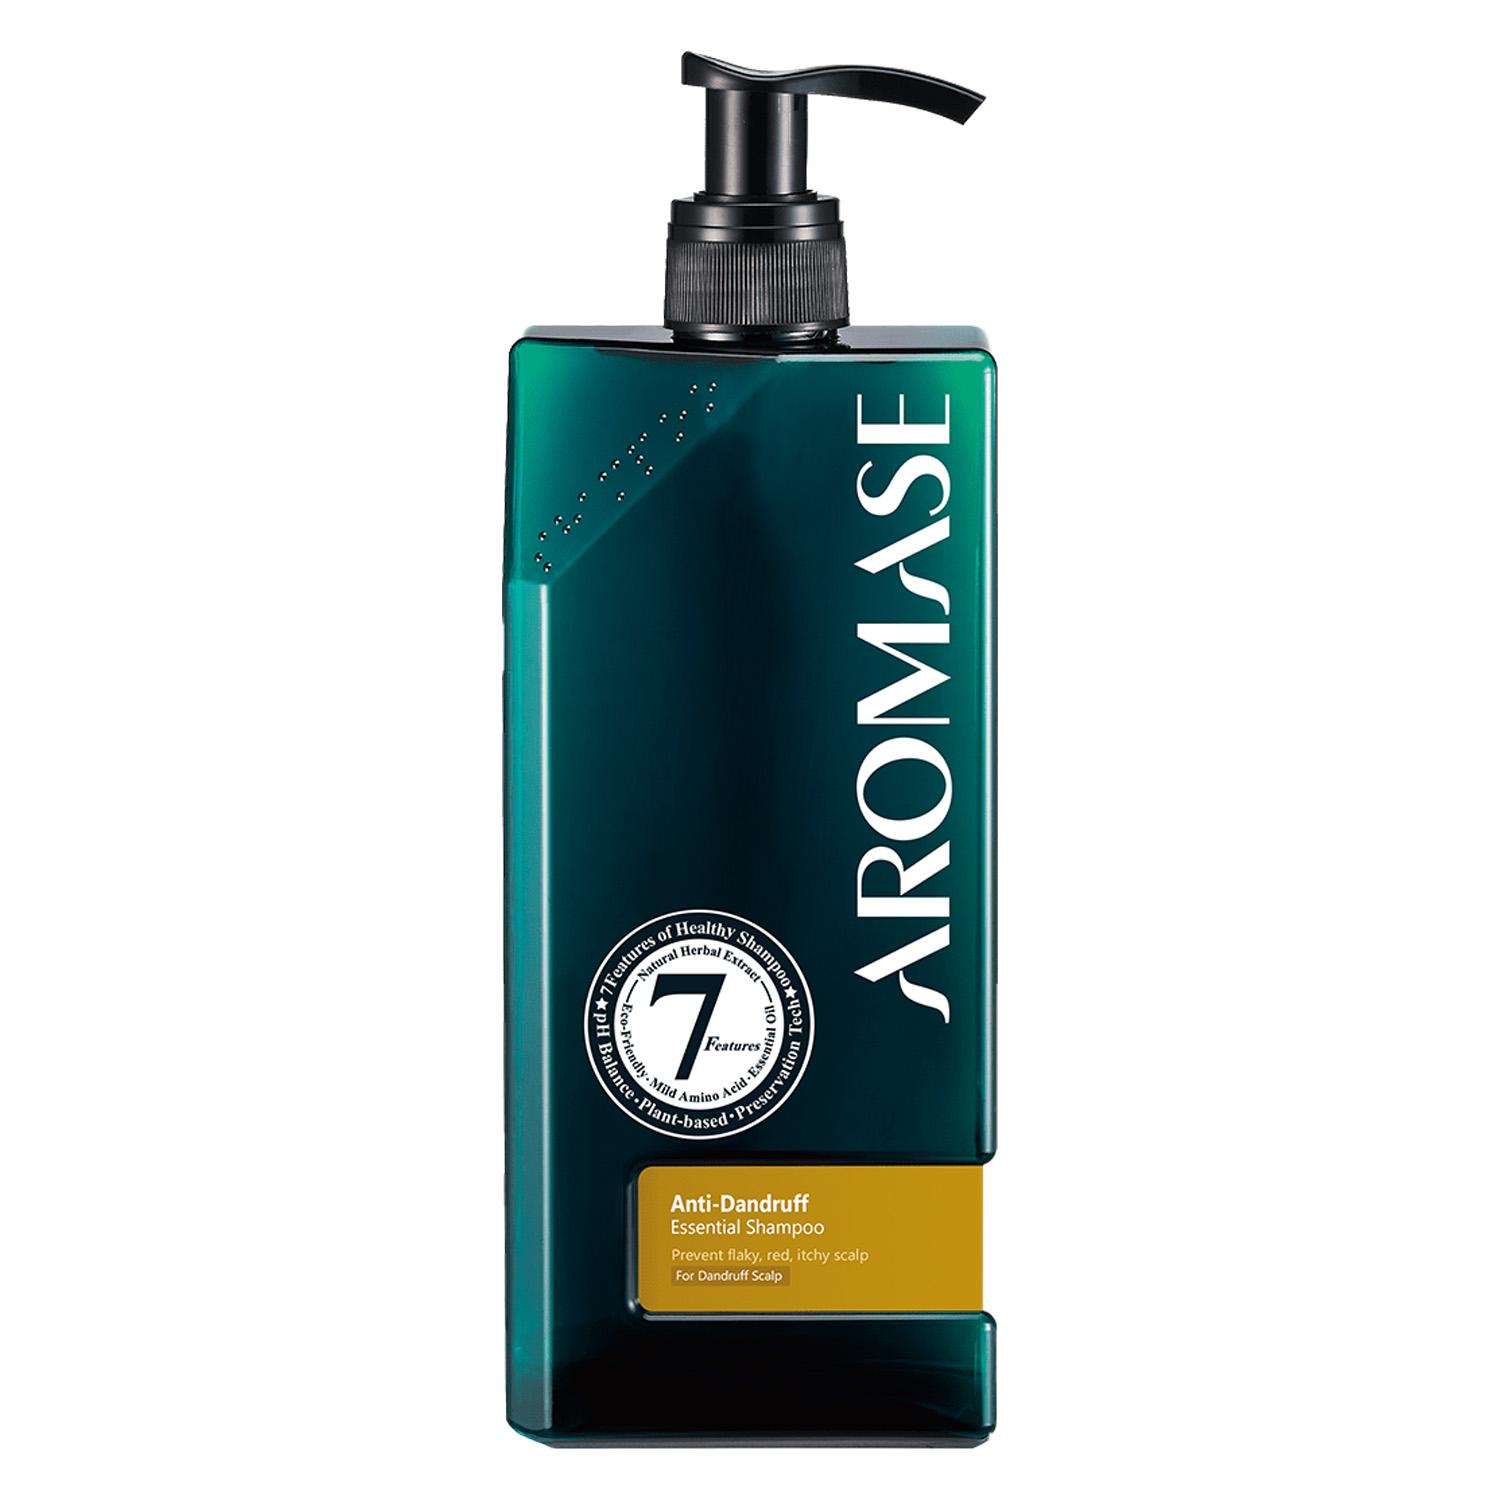 Aromase - Anti-Dandruff Essential Shampoo